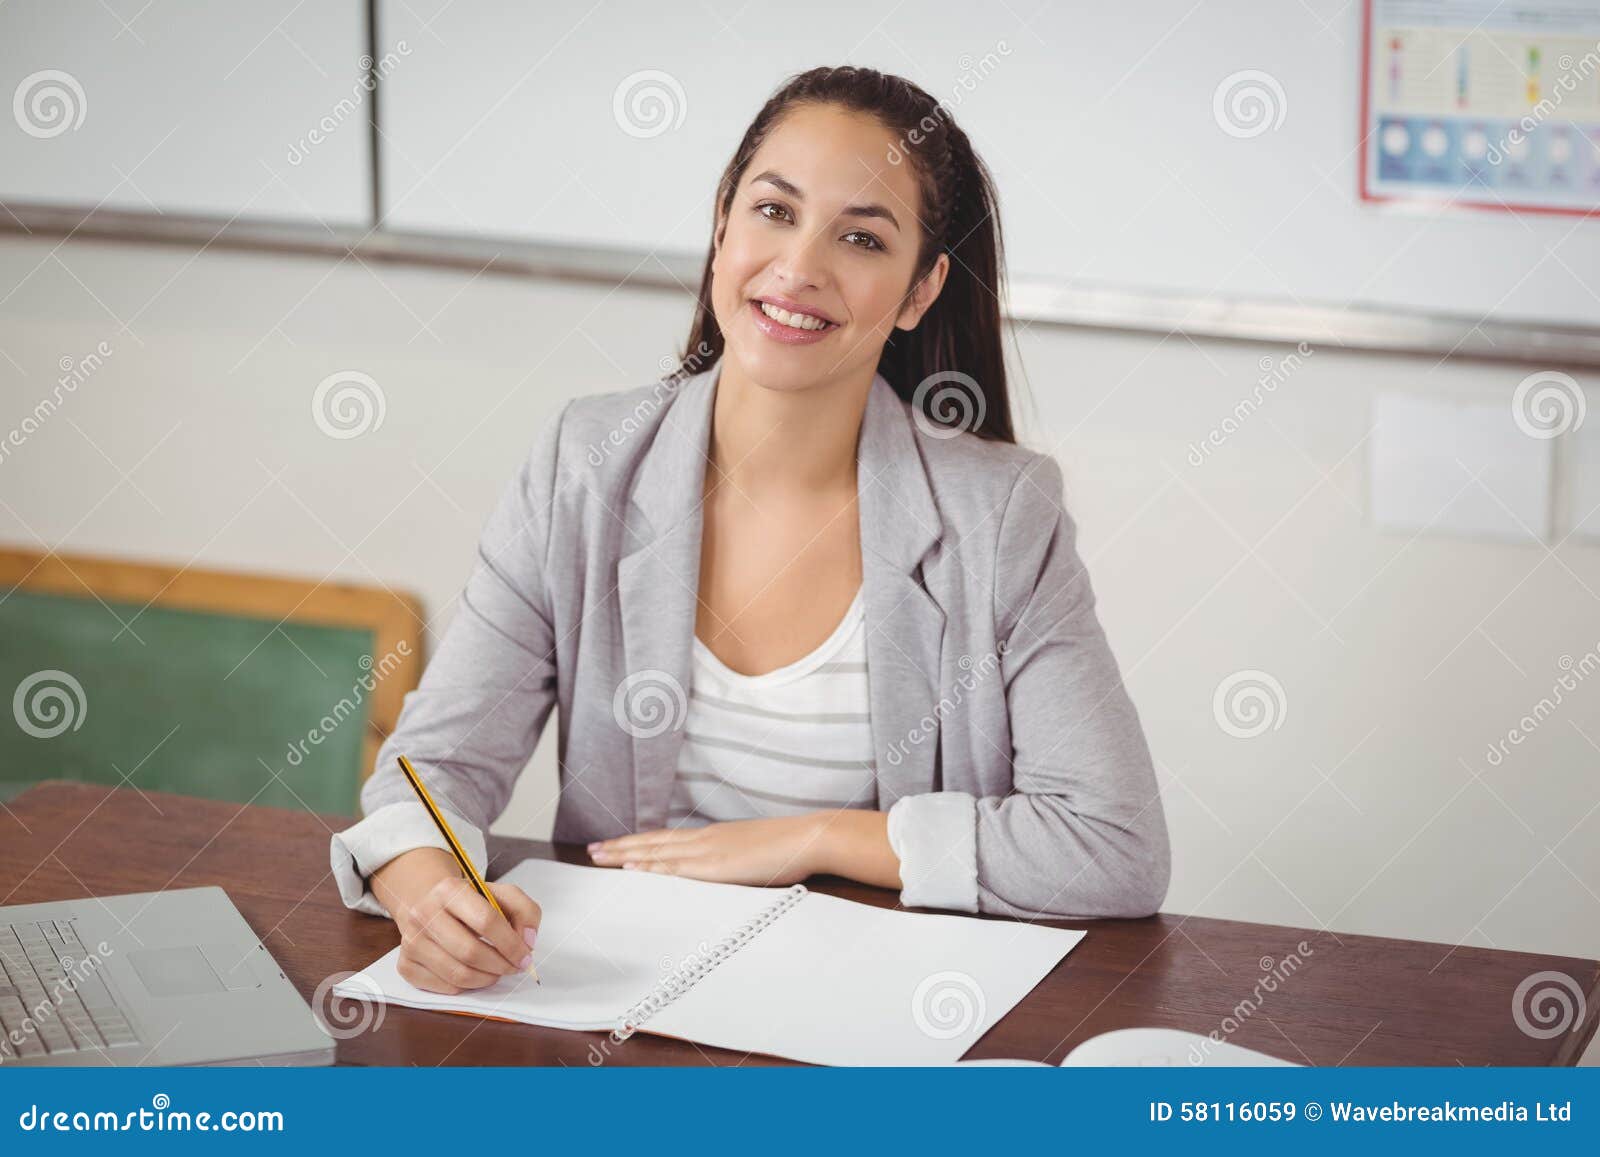 the teacher is correcting her essay